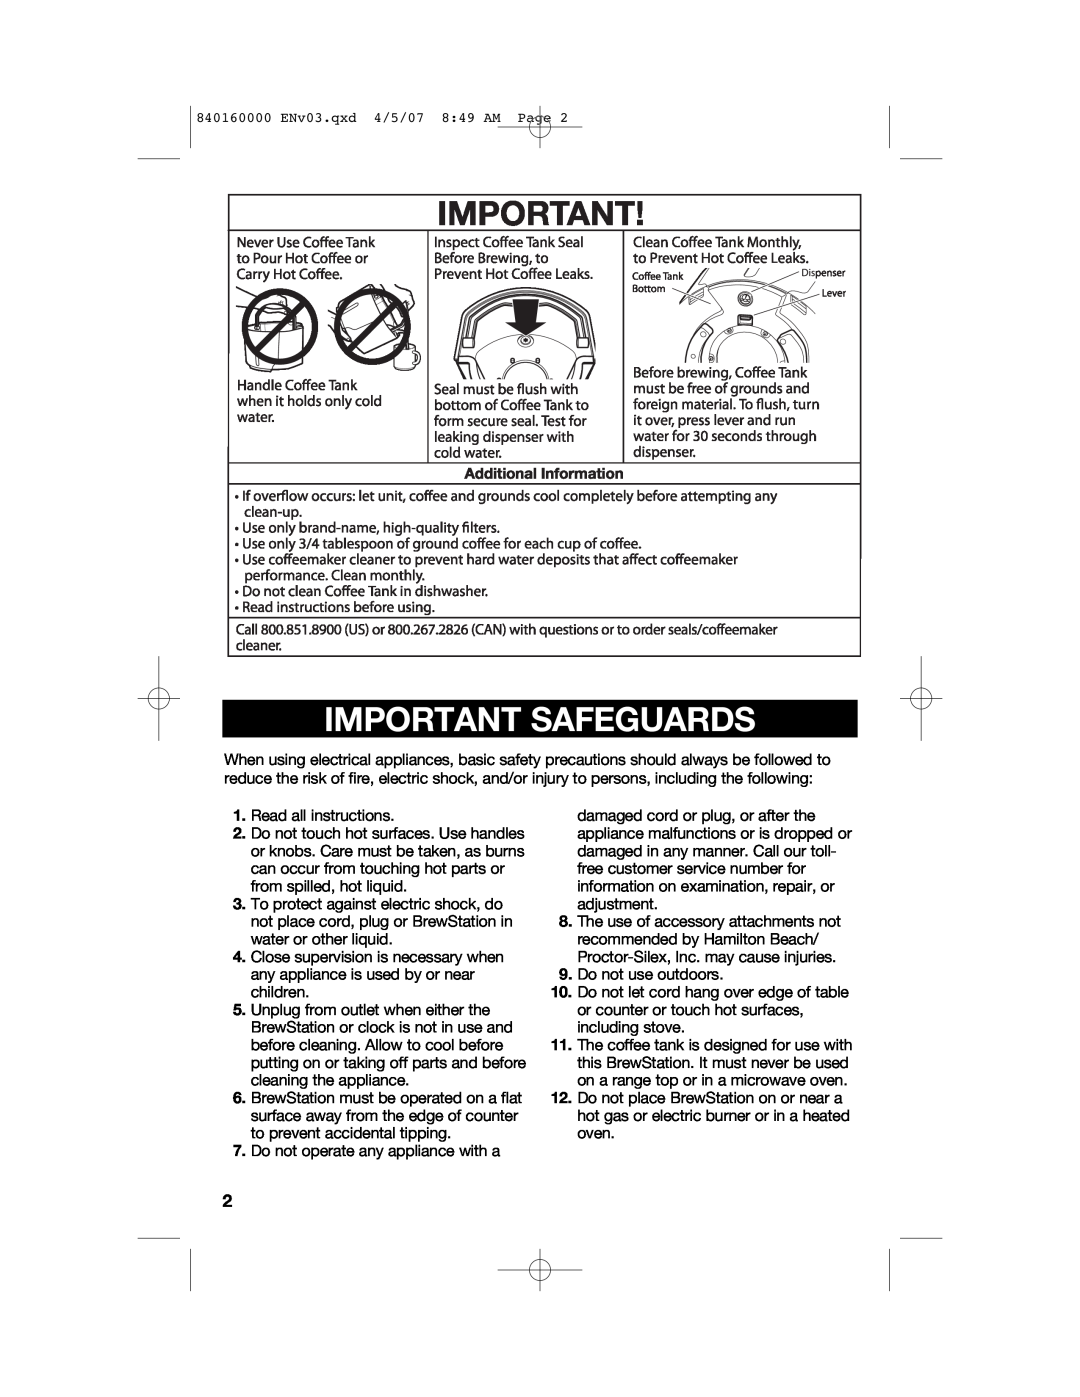 Hamilton Beach D43012B manual Important Safeguards 